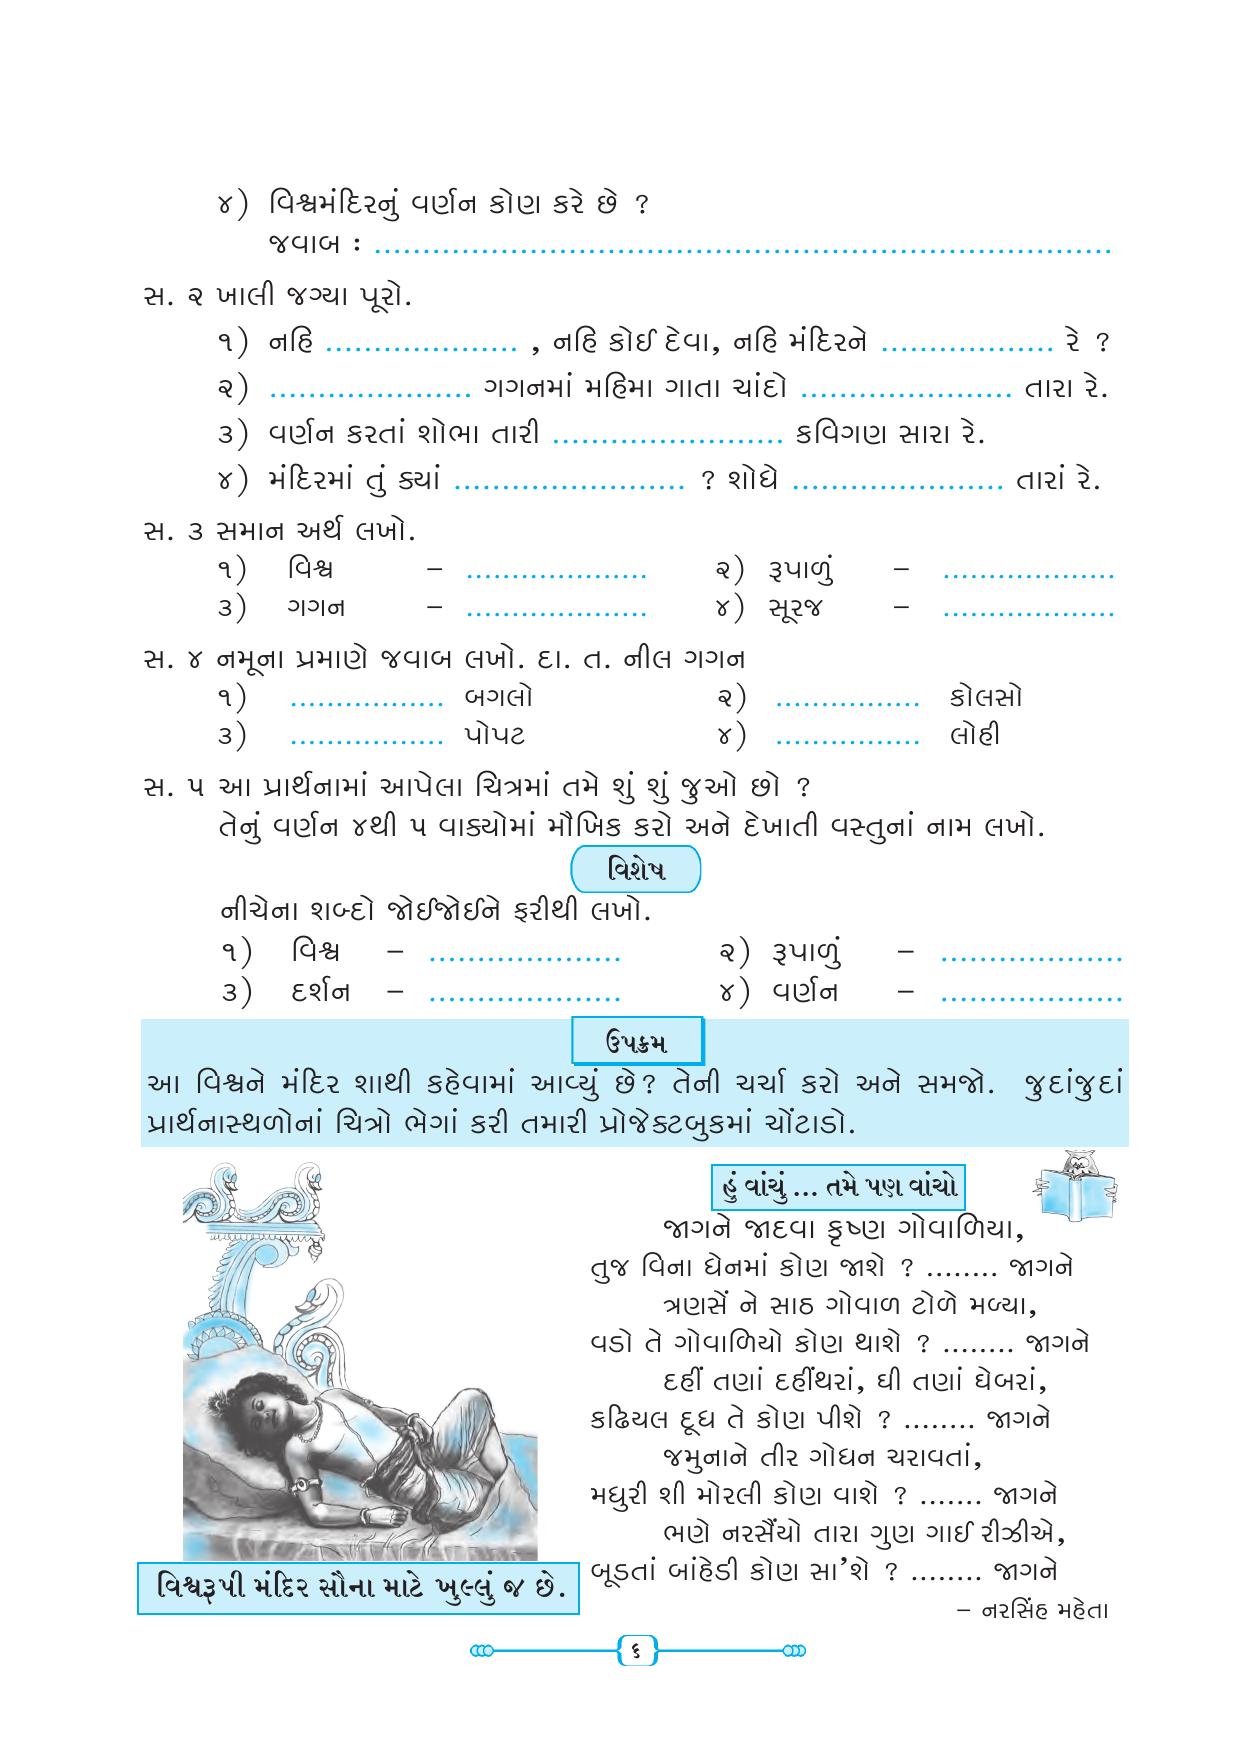 Maharashtra Board Class 5 Gujarati Textbook - Page 15